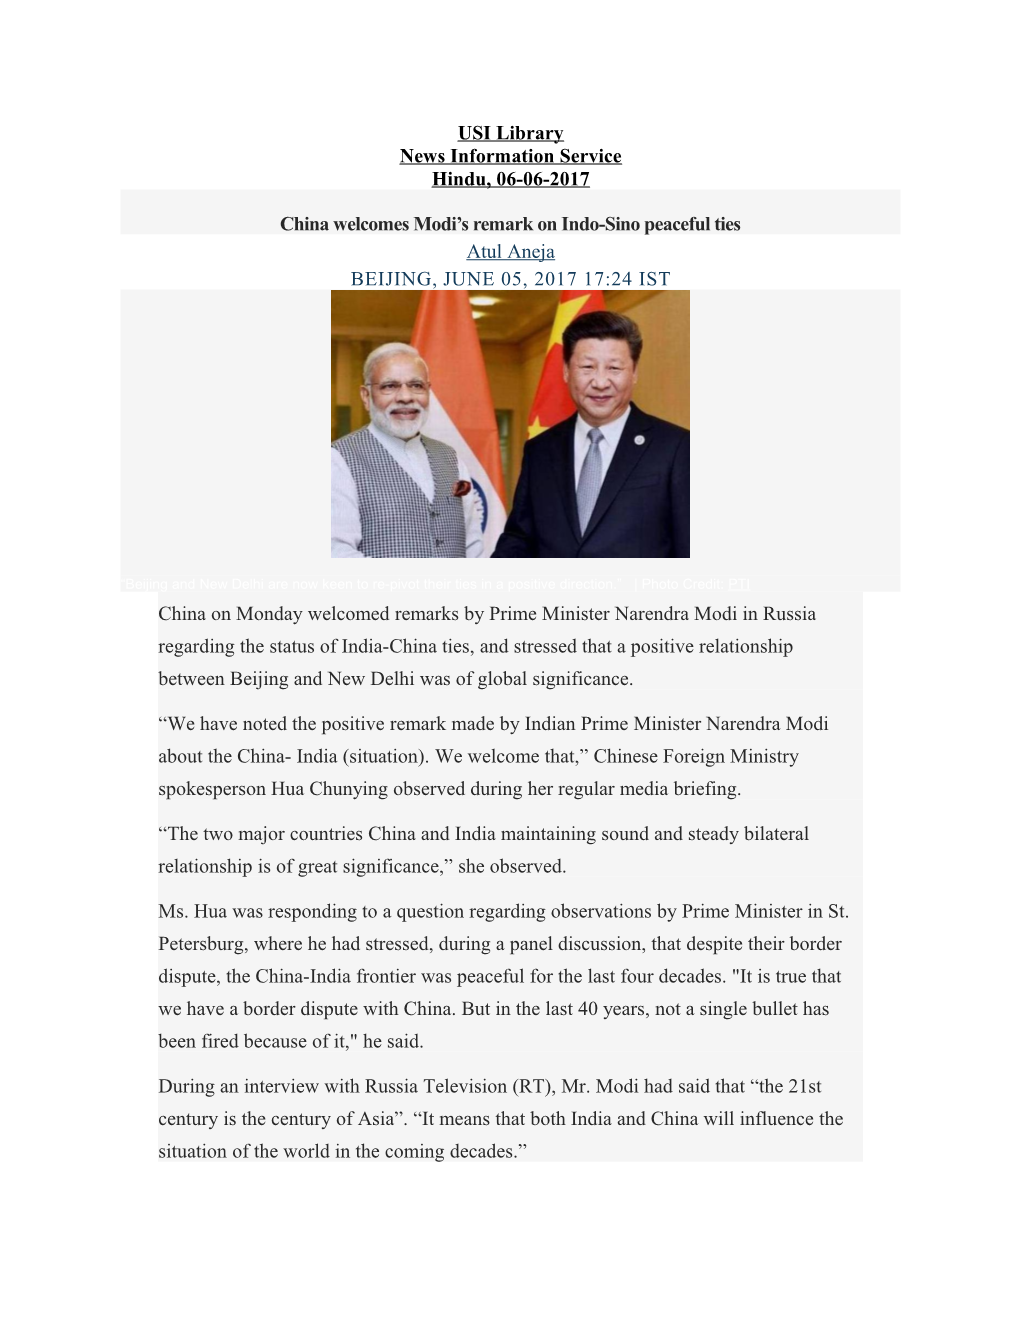 China Welcomes Modi S Remark on Indo-Sino Peaceful Ties